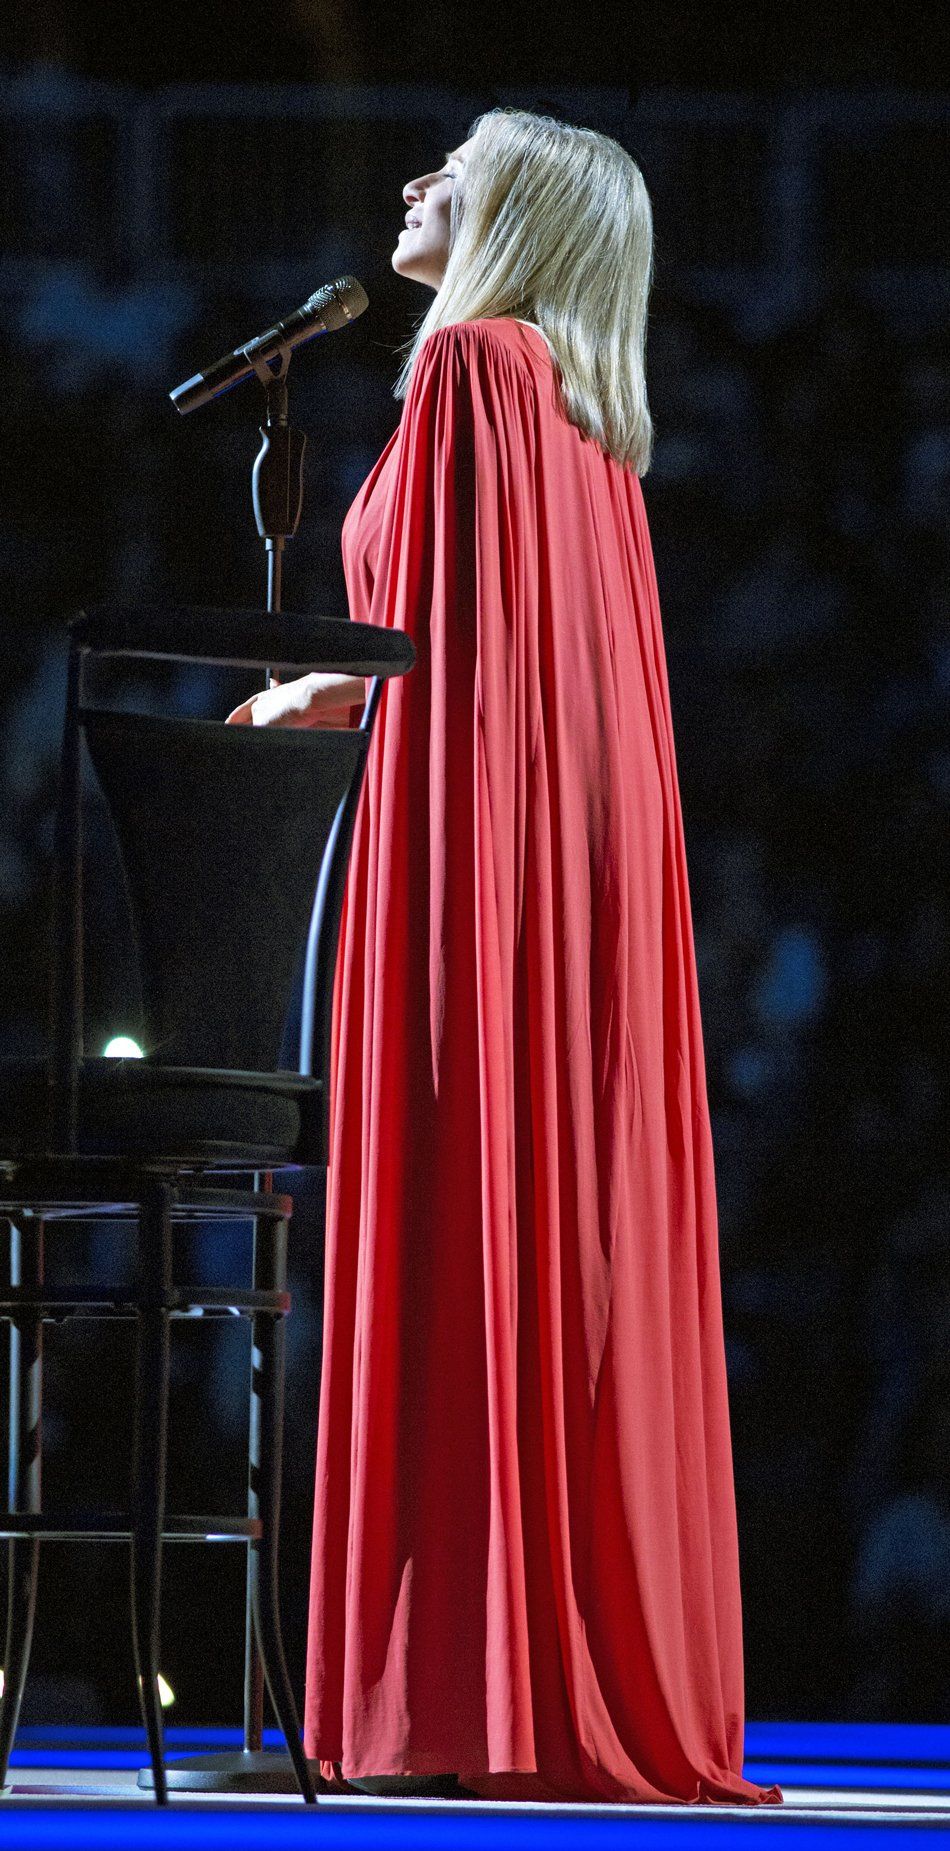 Streisand in concert, 2012